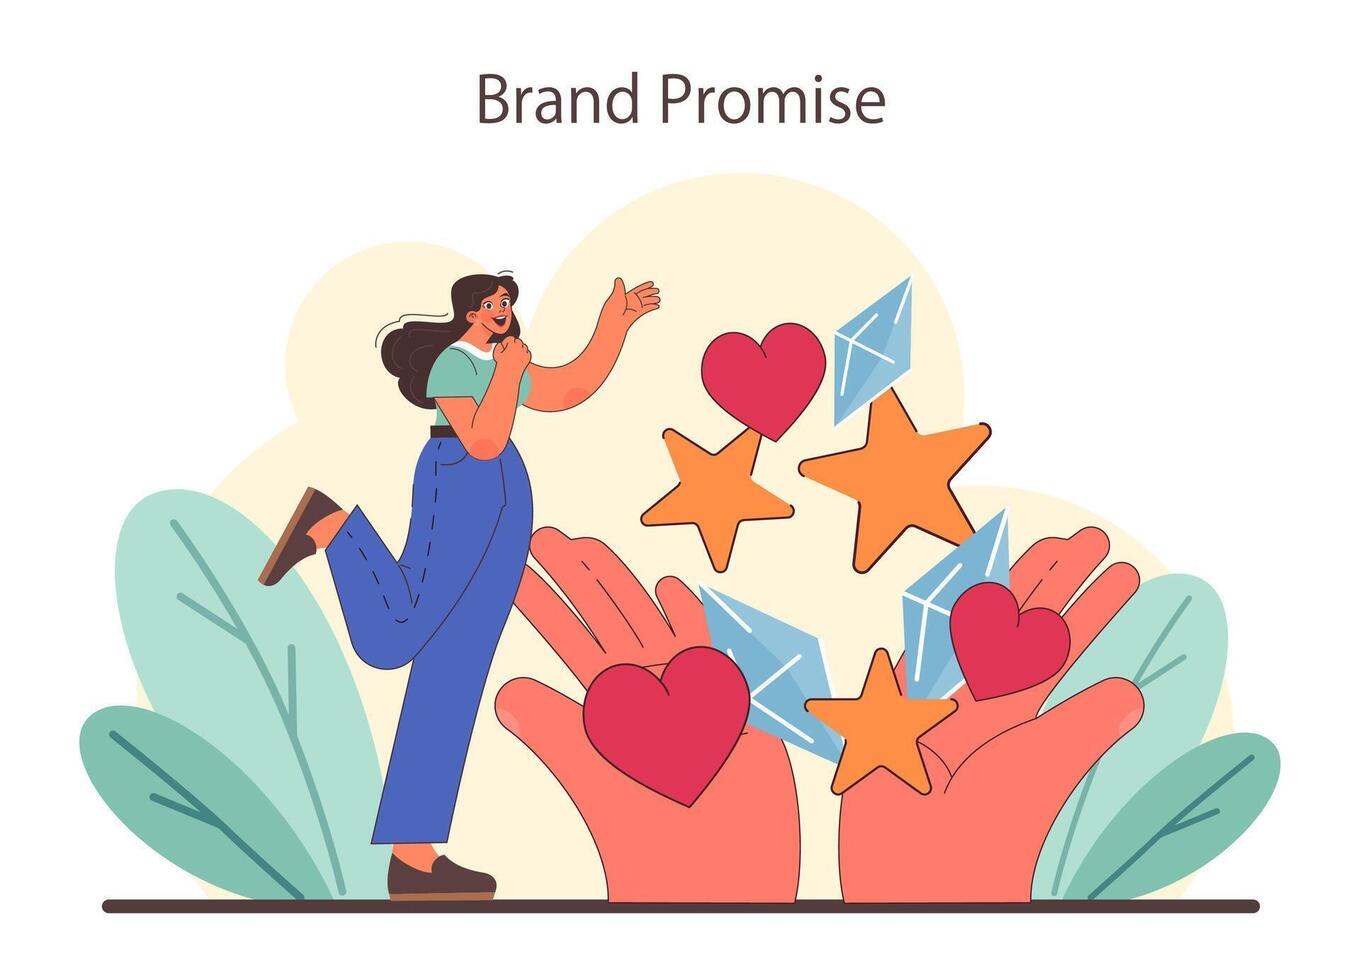 Brand Promise concept. Flat vector illustration